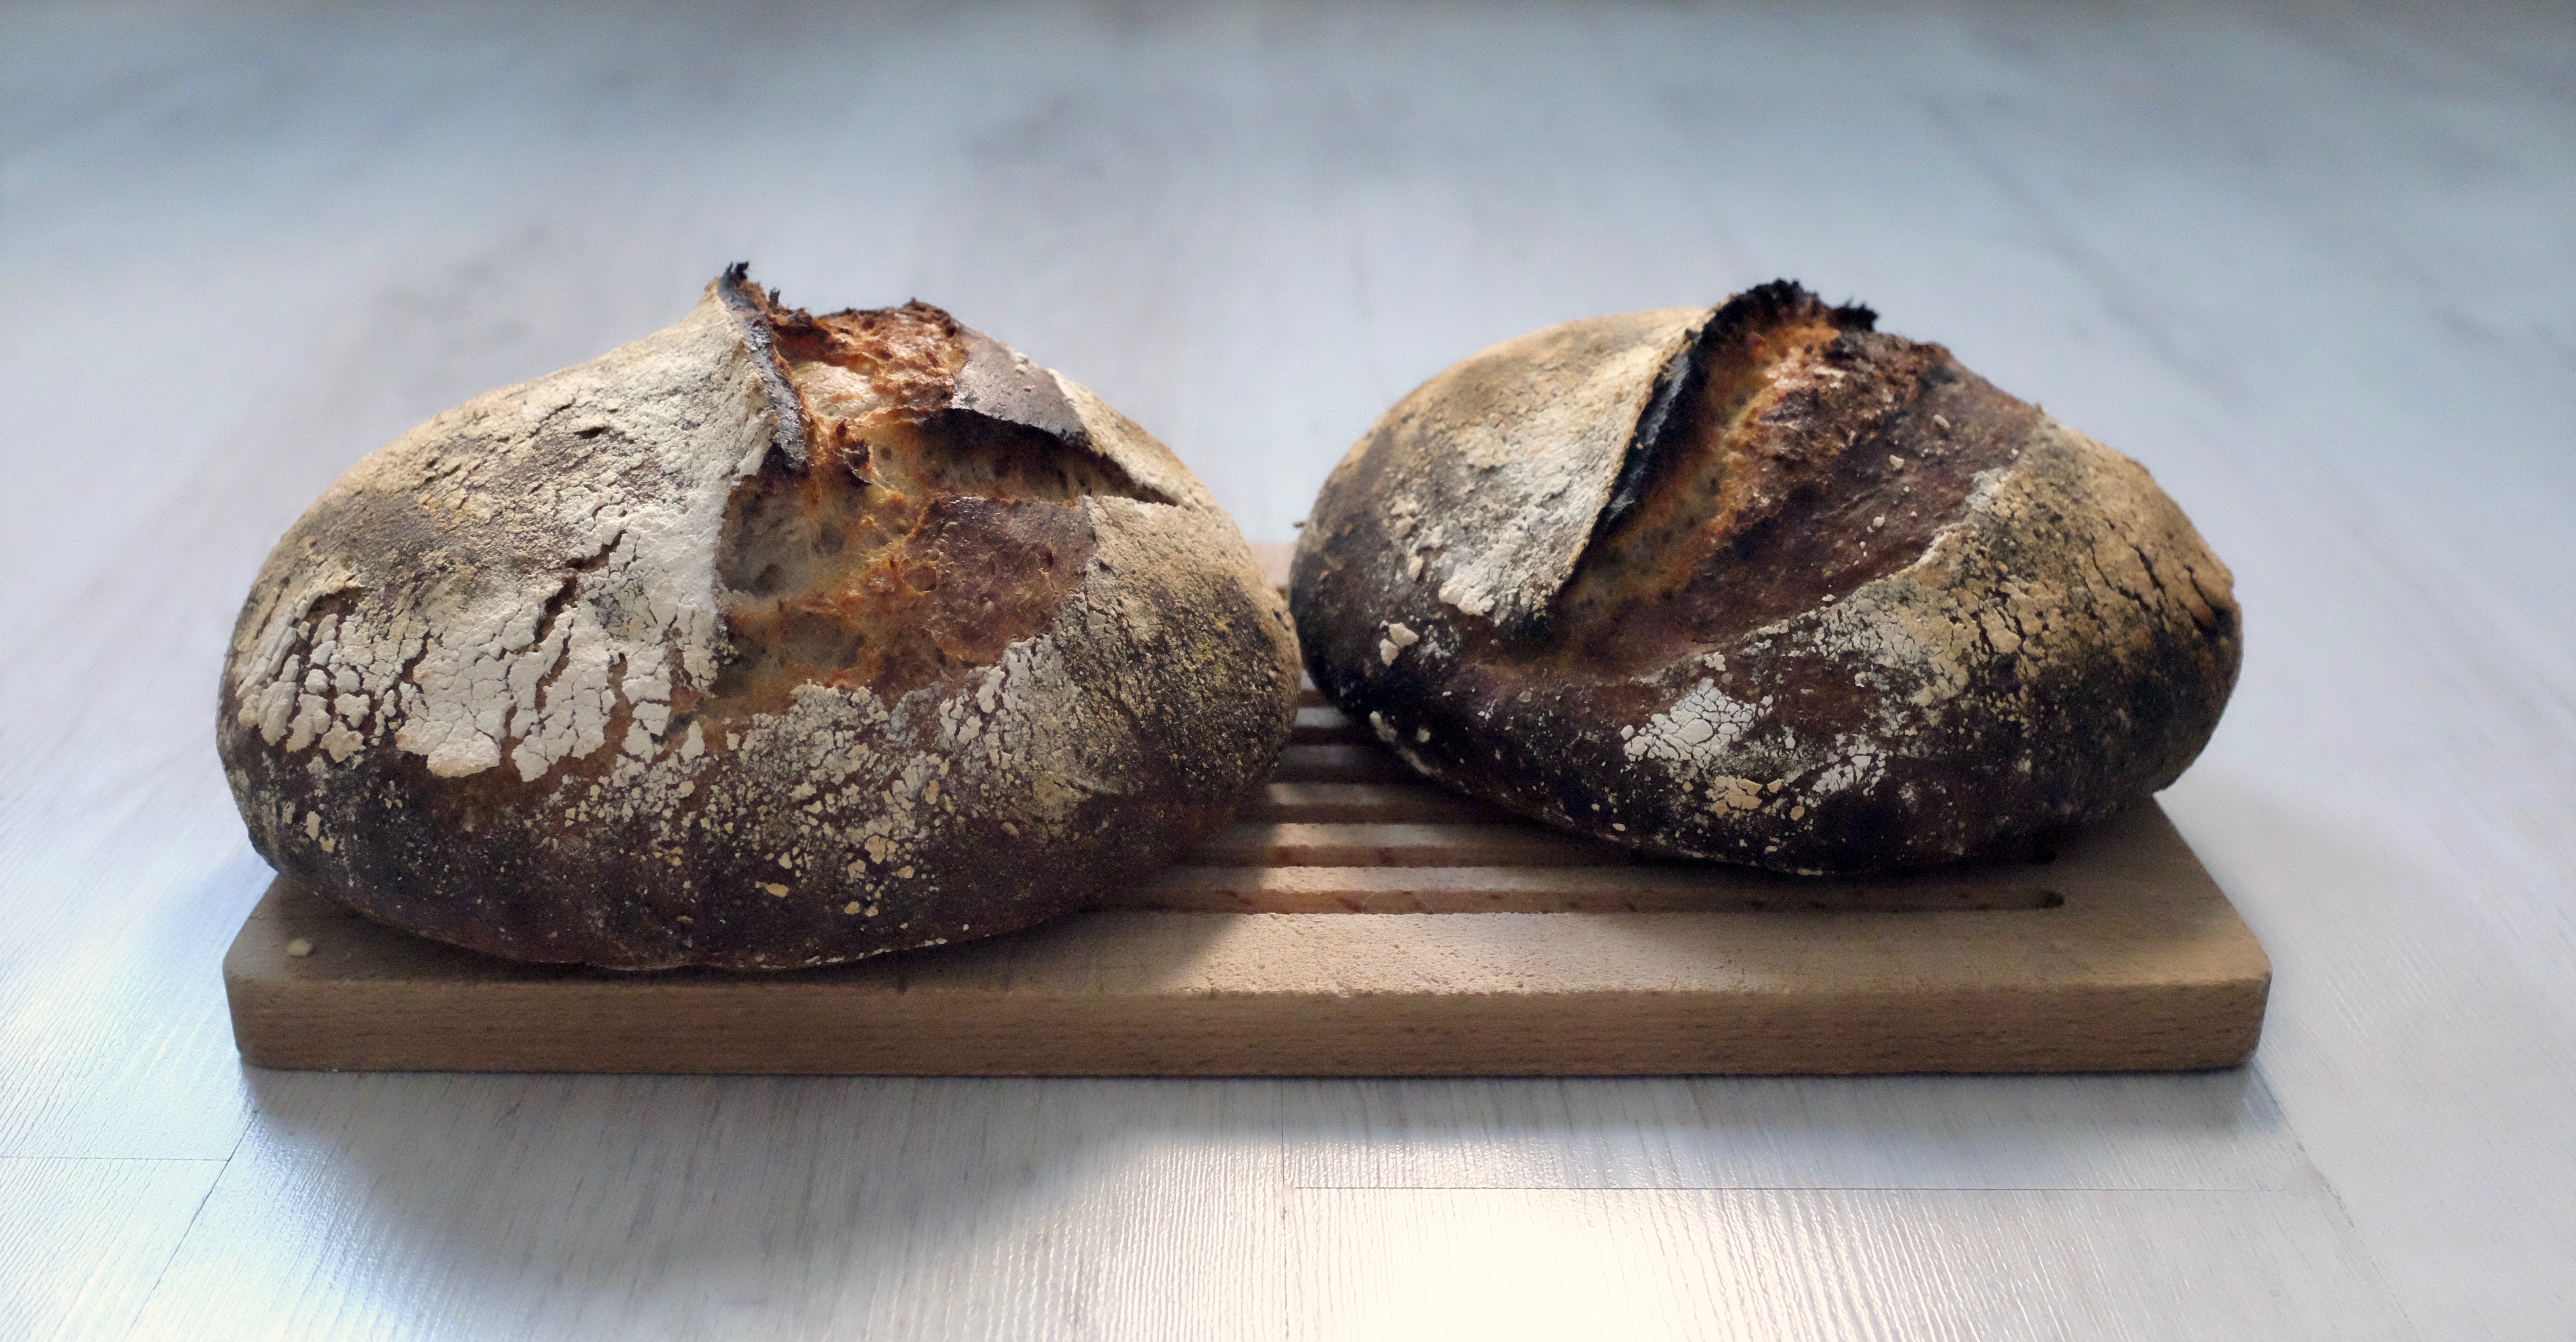 Two loafs of bread